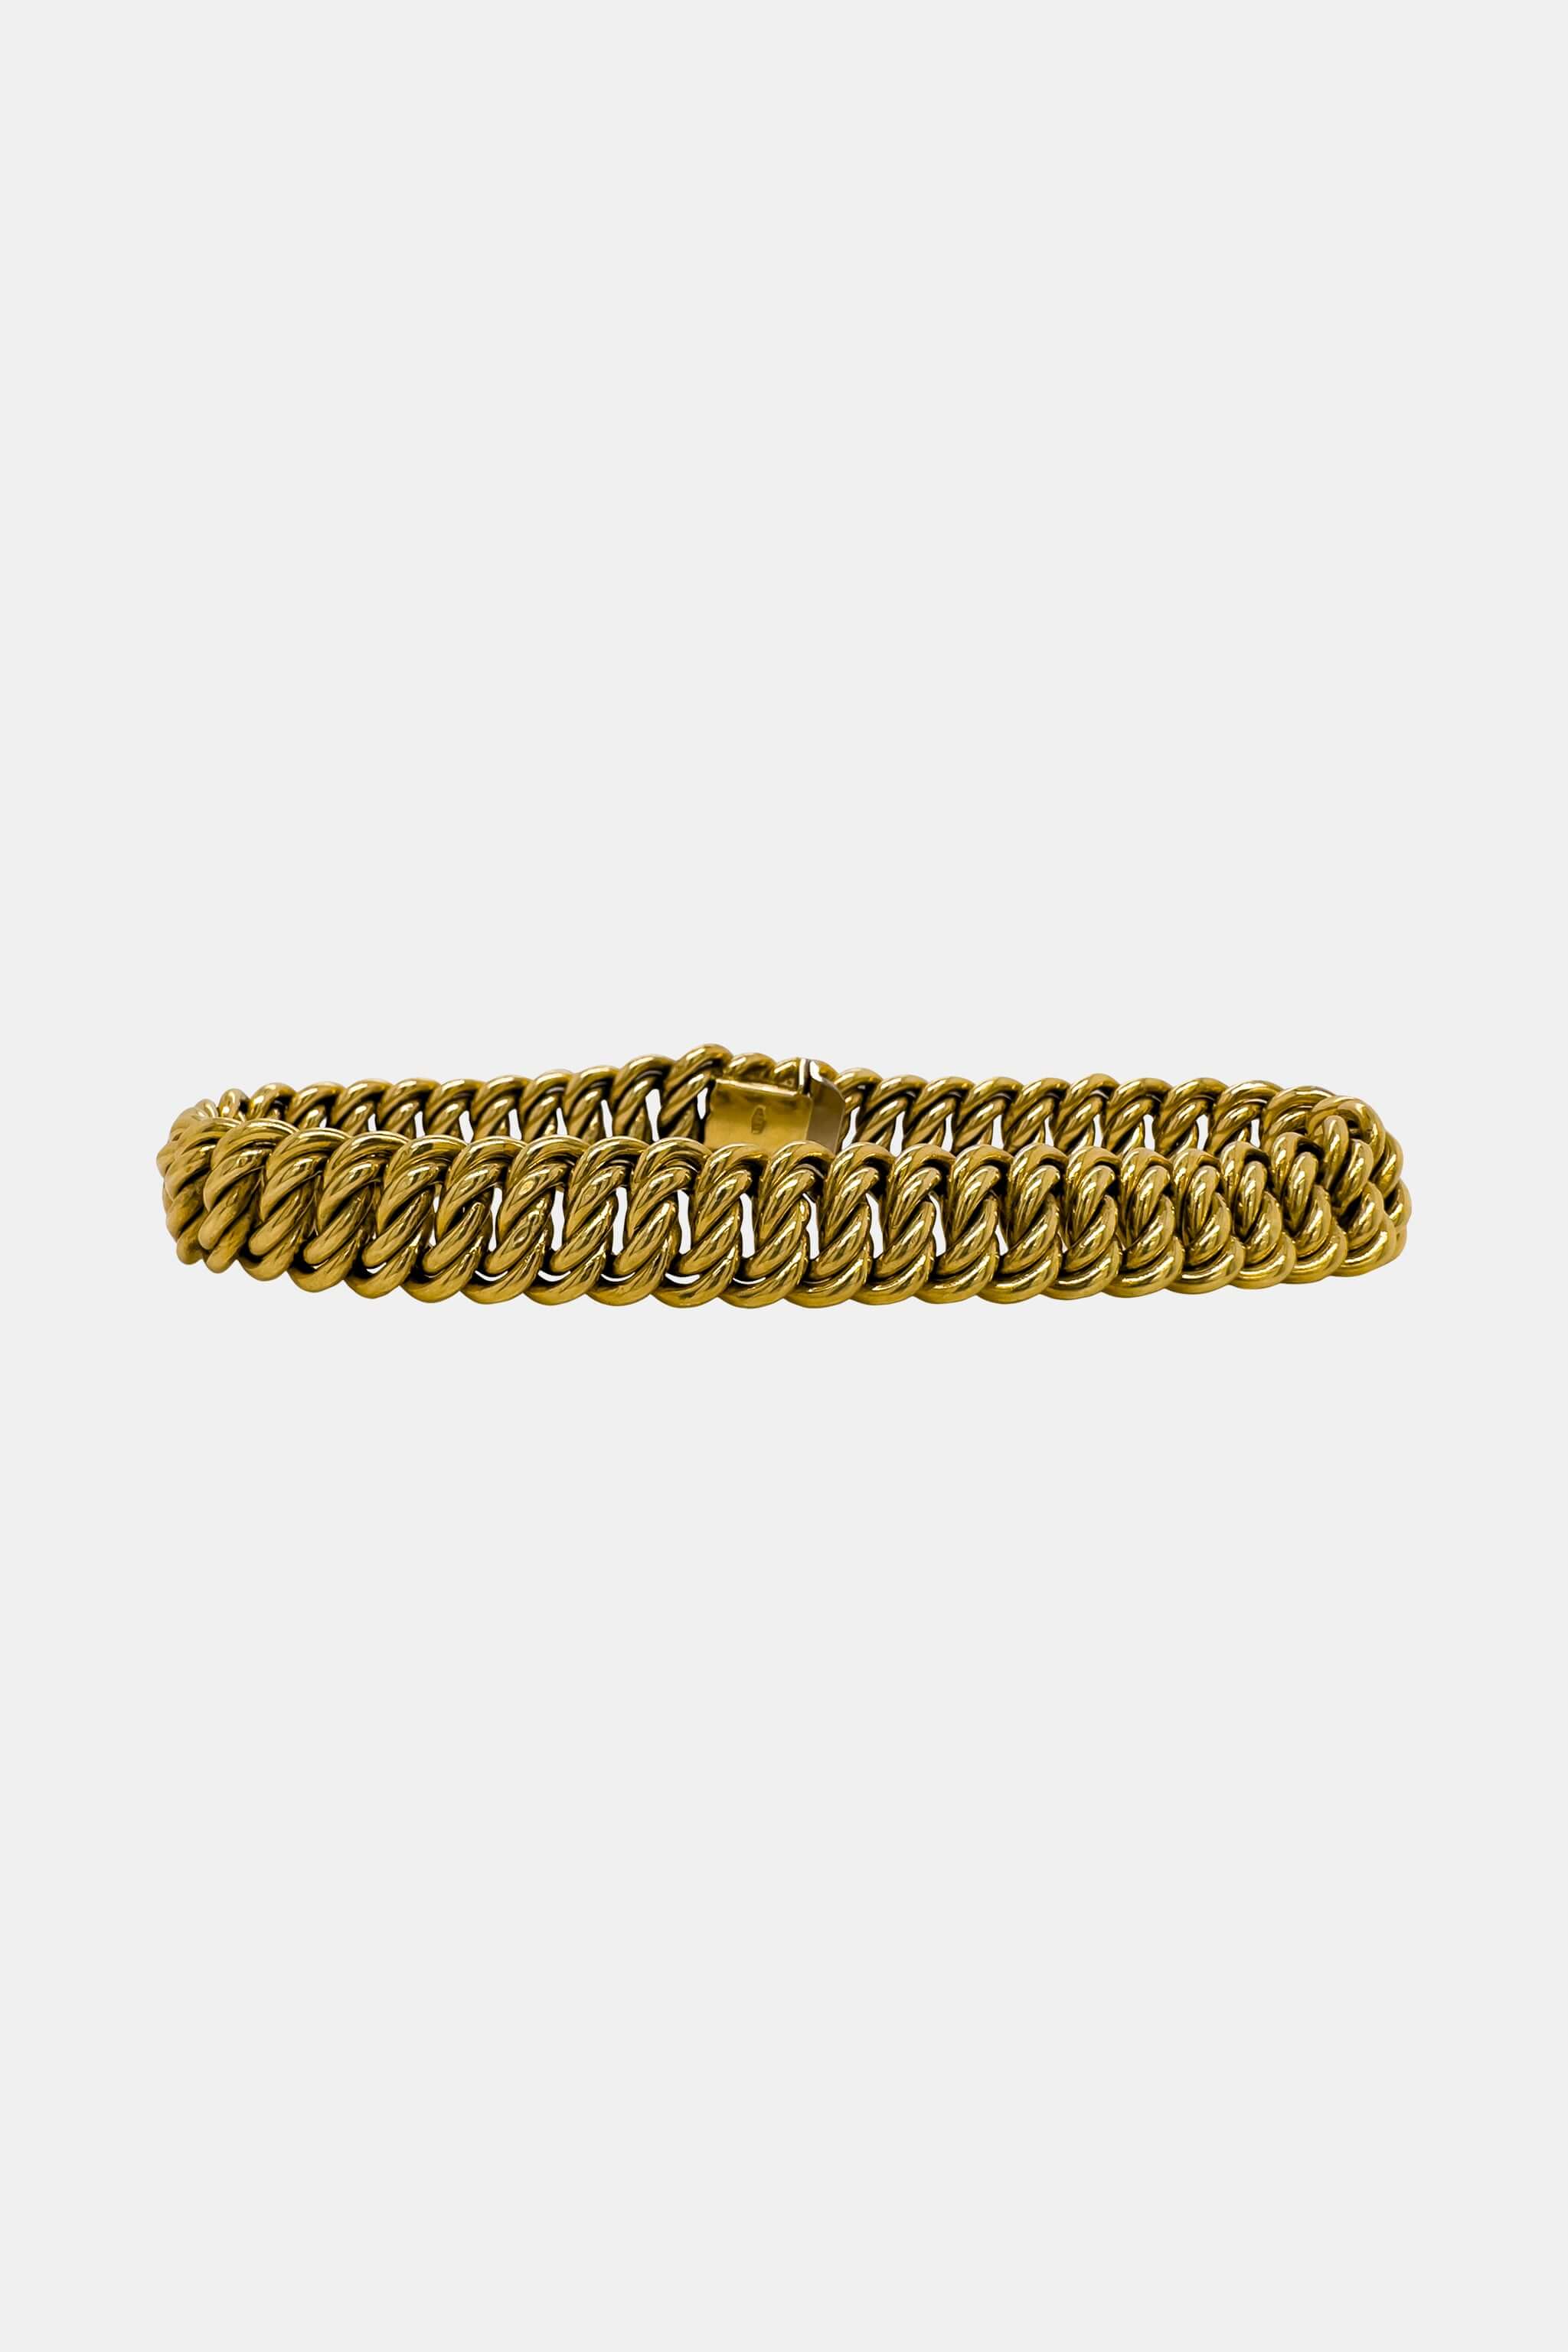 Mid Century Gold Bracelet